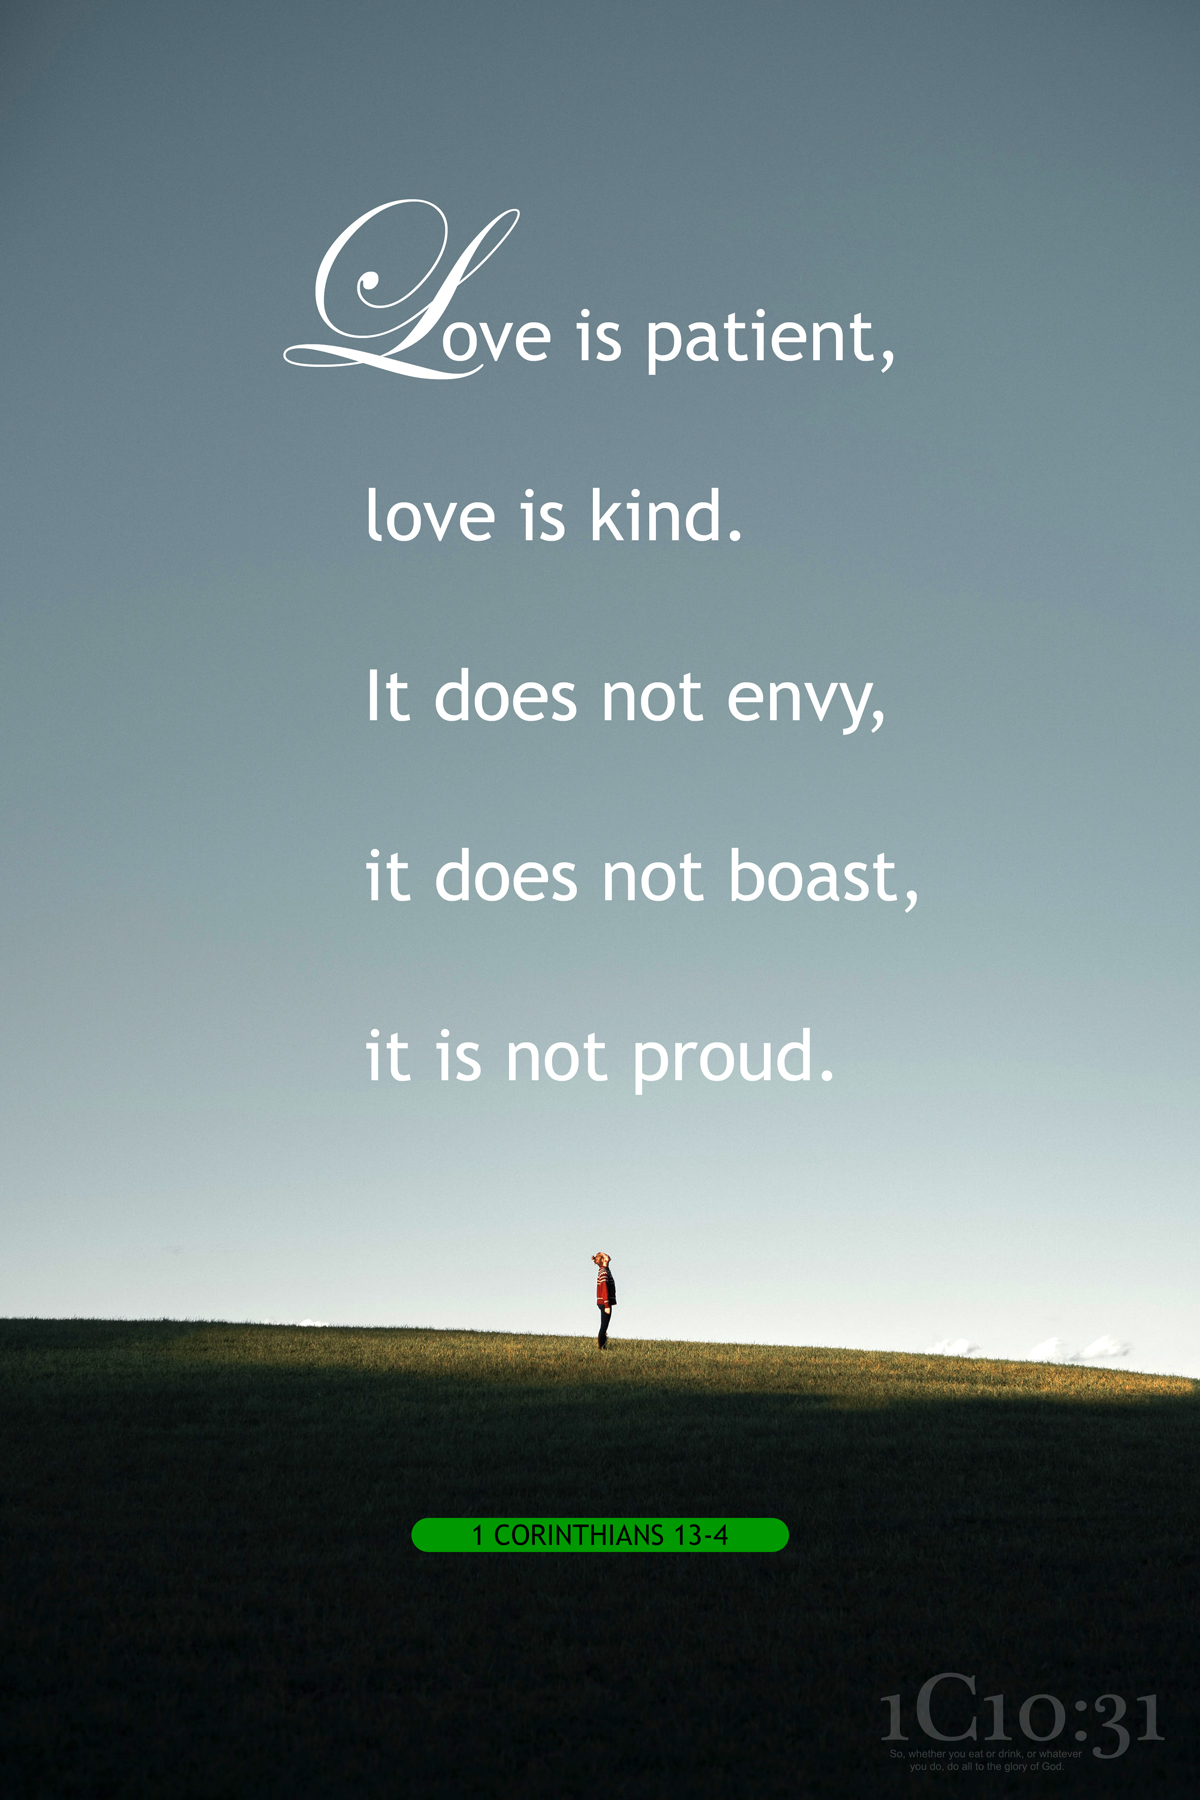 1 Corinthians 13:4 
Love is patient, love is kind. It does not envy, it does not boast, it is not proud.